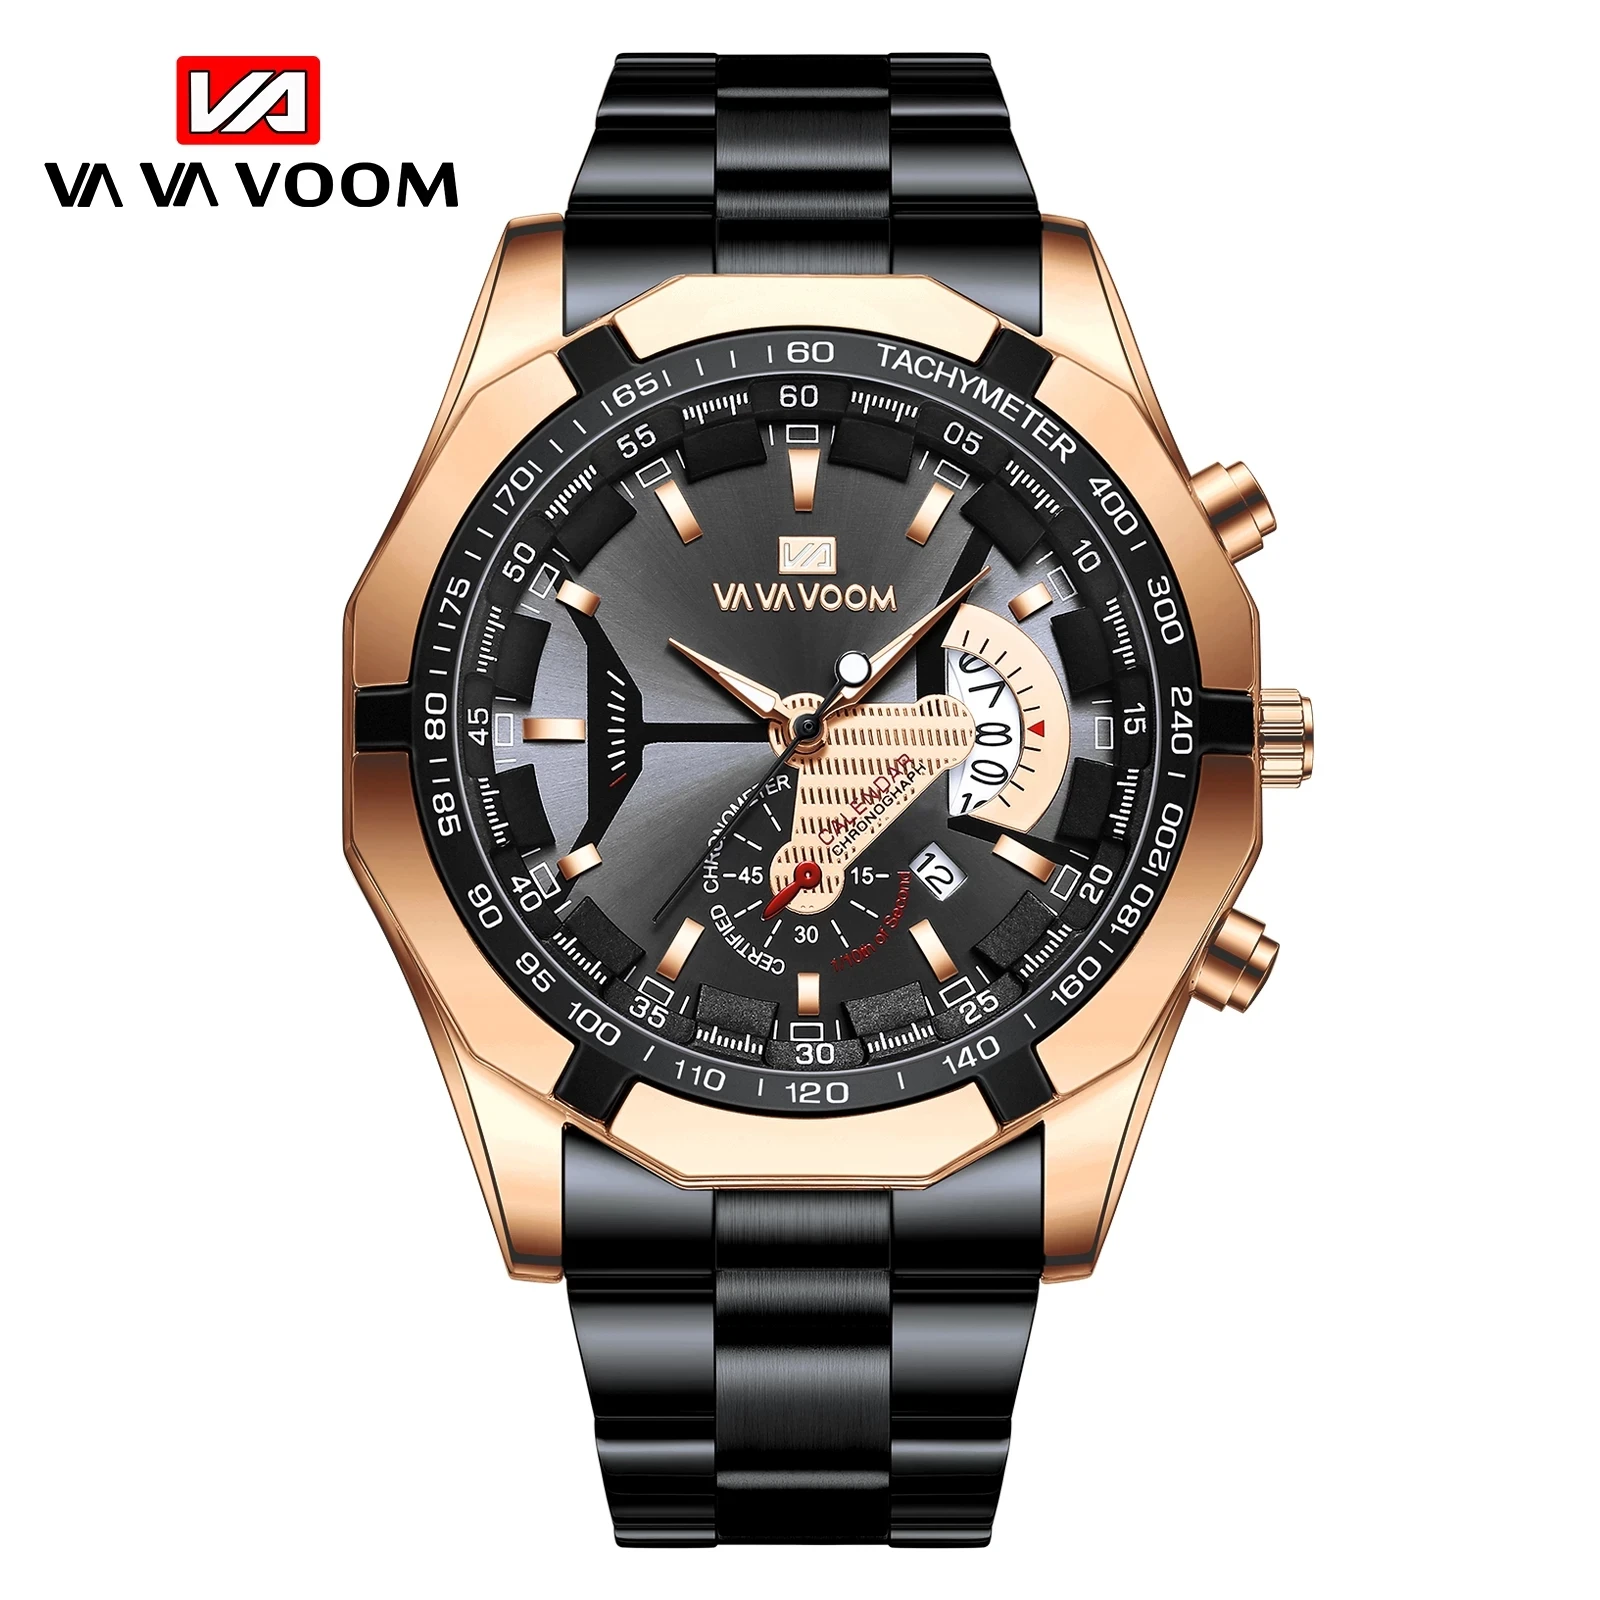 

VAVA VOOM Watches Men Sport Stainless Steel Band Waterproof Casual Military Outdoor Luxury Quartz Watch часы мужские Silver